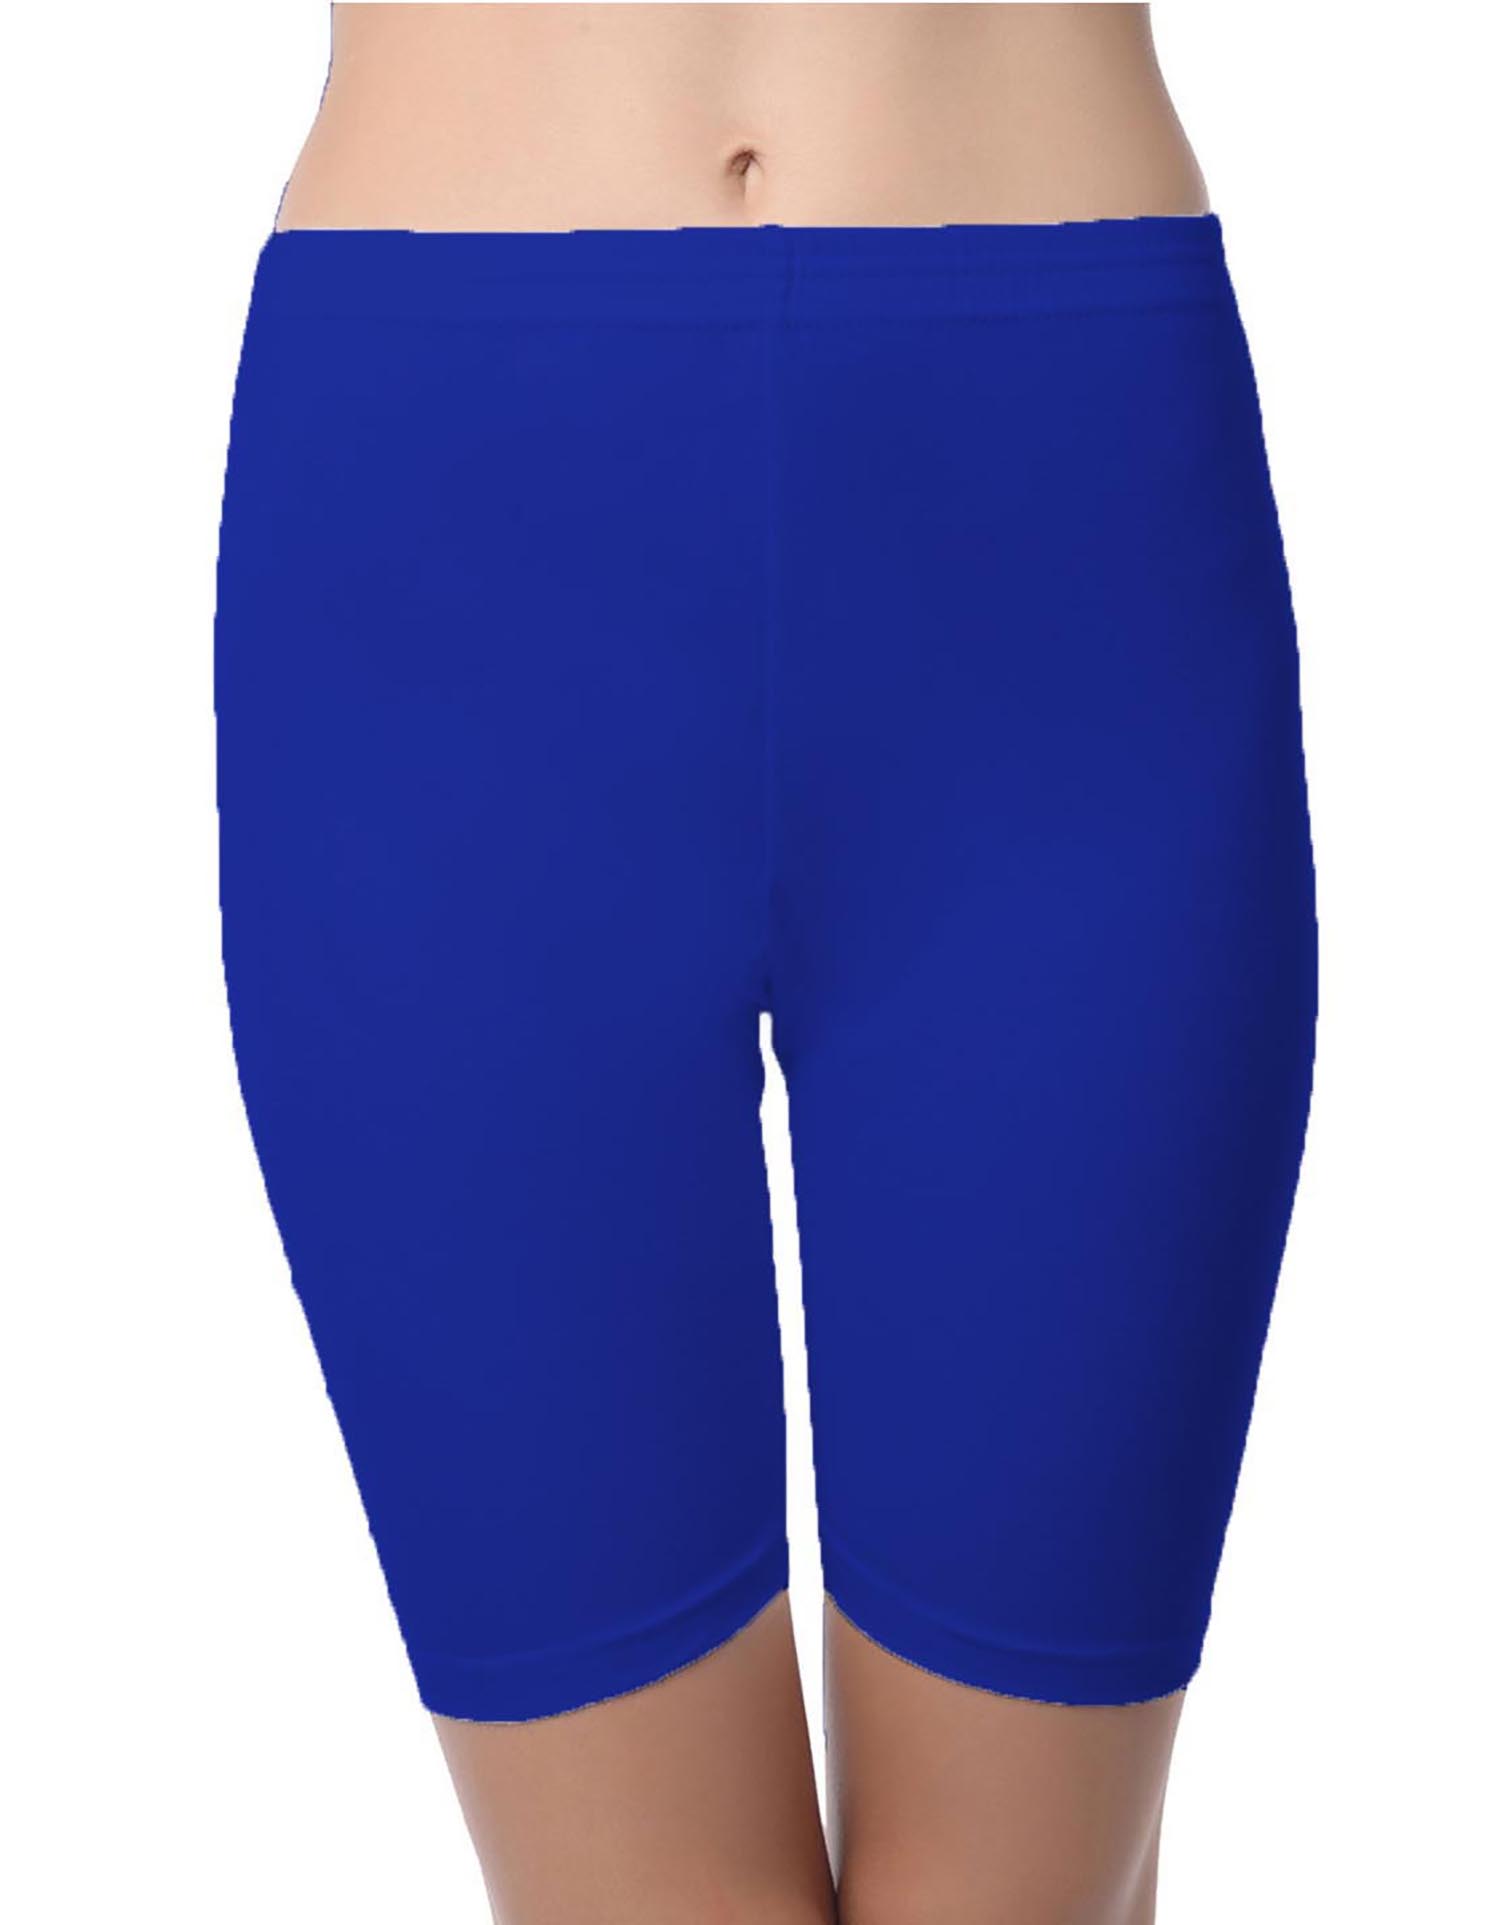 Buy SBF Solid Plain Hosiery Shorts Tight Knee Length Spandex Stretch ...